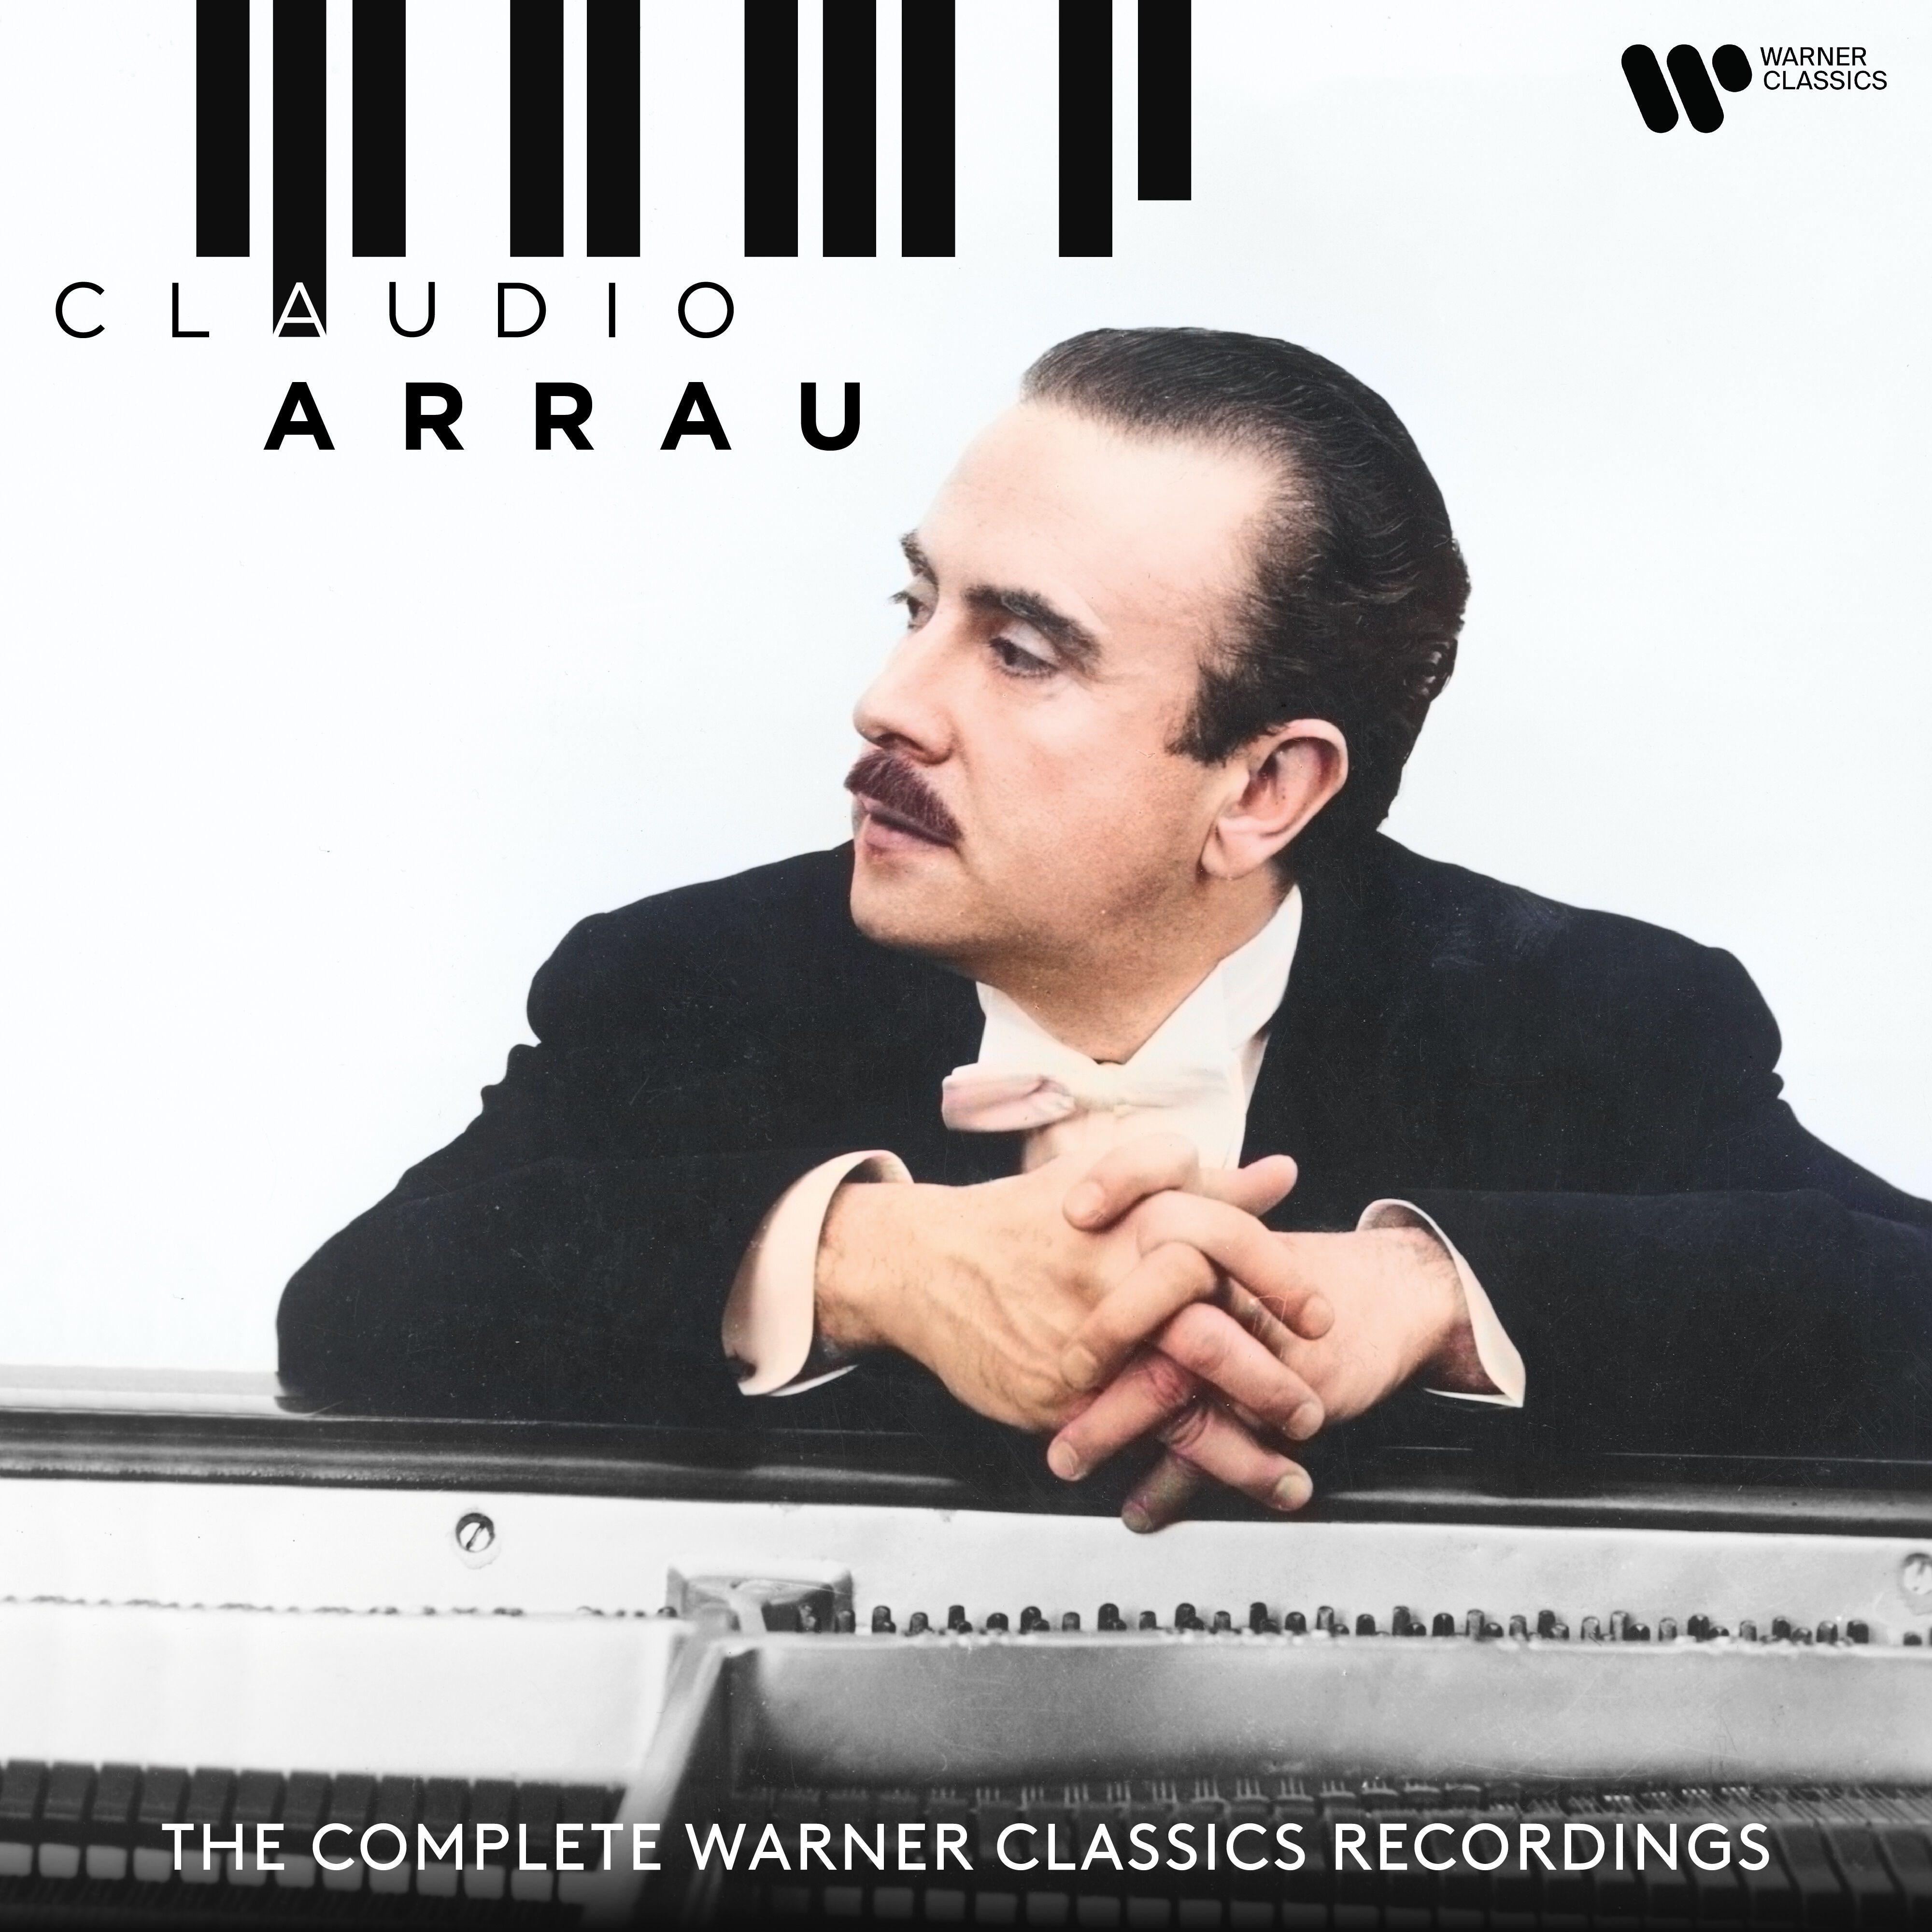 Claudio Arrau - The Complete Warner Classics Recordings - 03 of 10 24b192